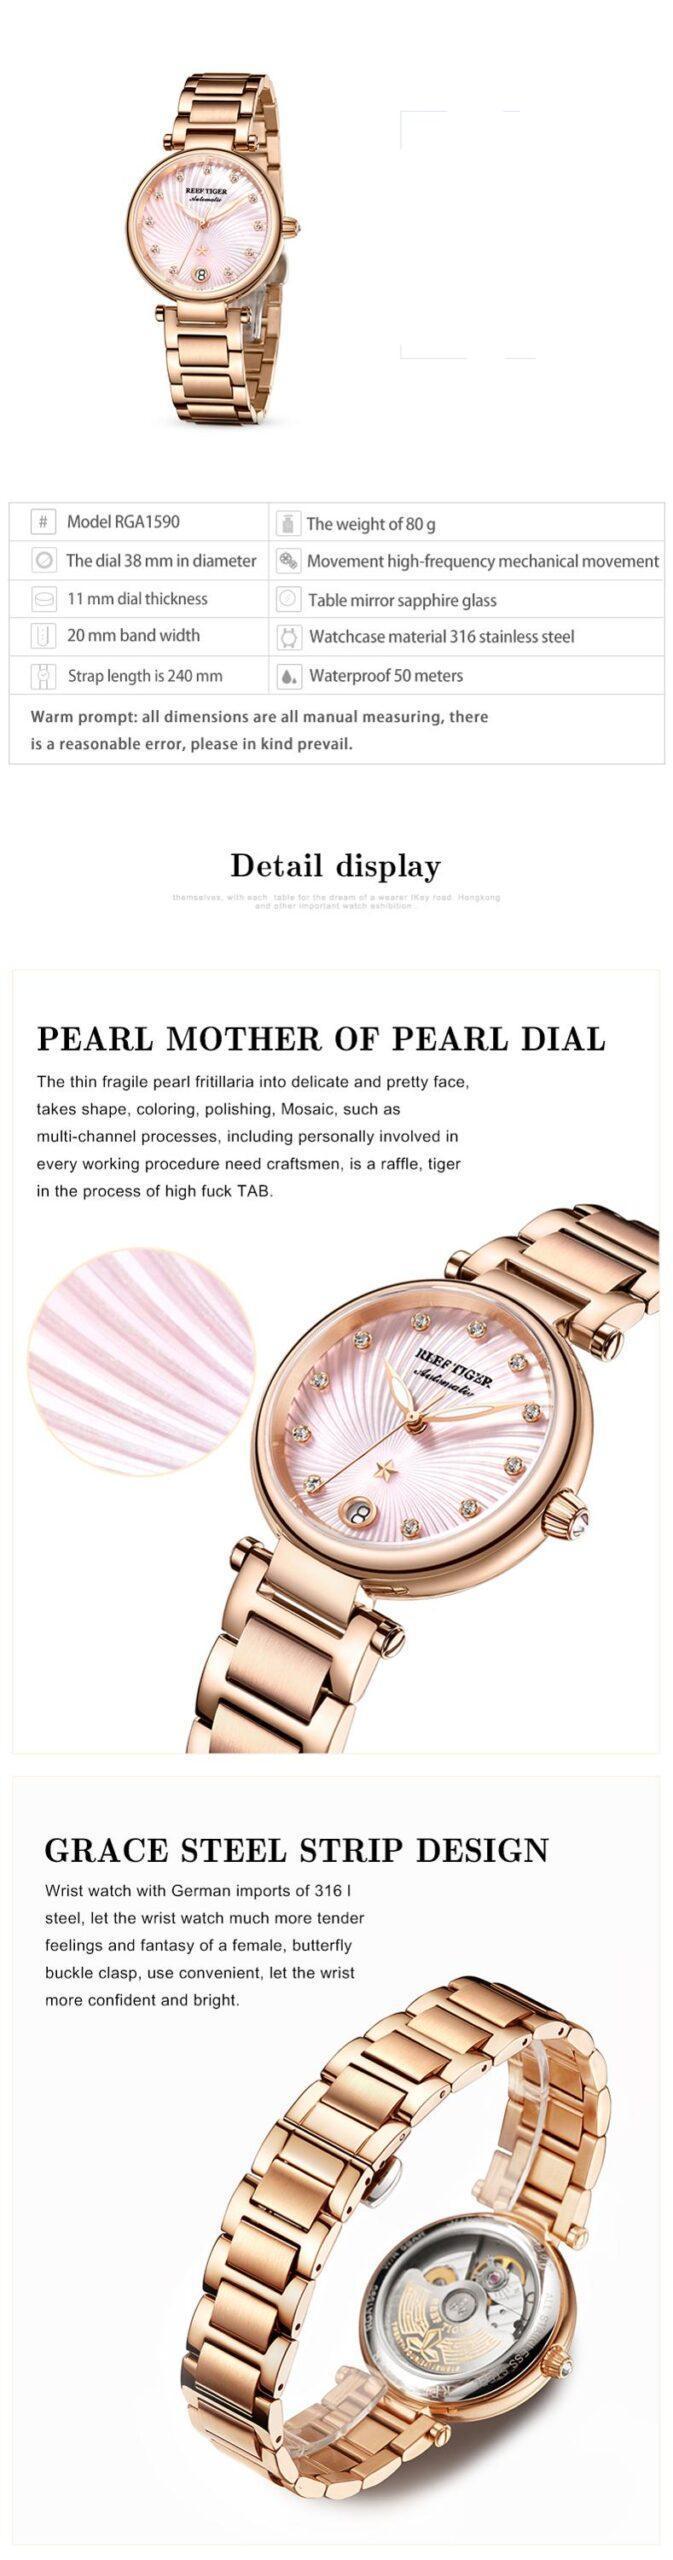 Reef Tiger/RT Luxury Brand Women Wrist Watch Rose Gold Blue Dial Automatic Watches Diamond Ladies Bracelet Watches RGA1590